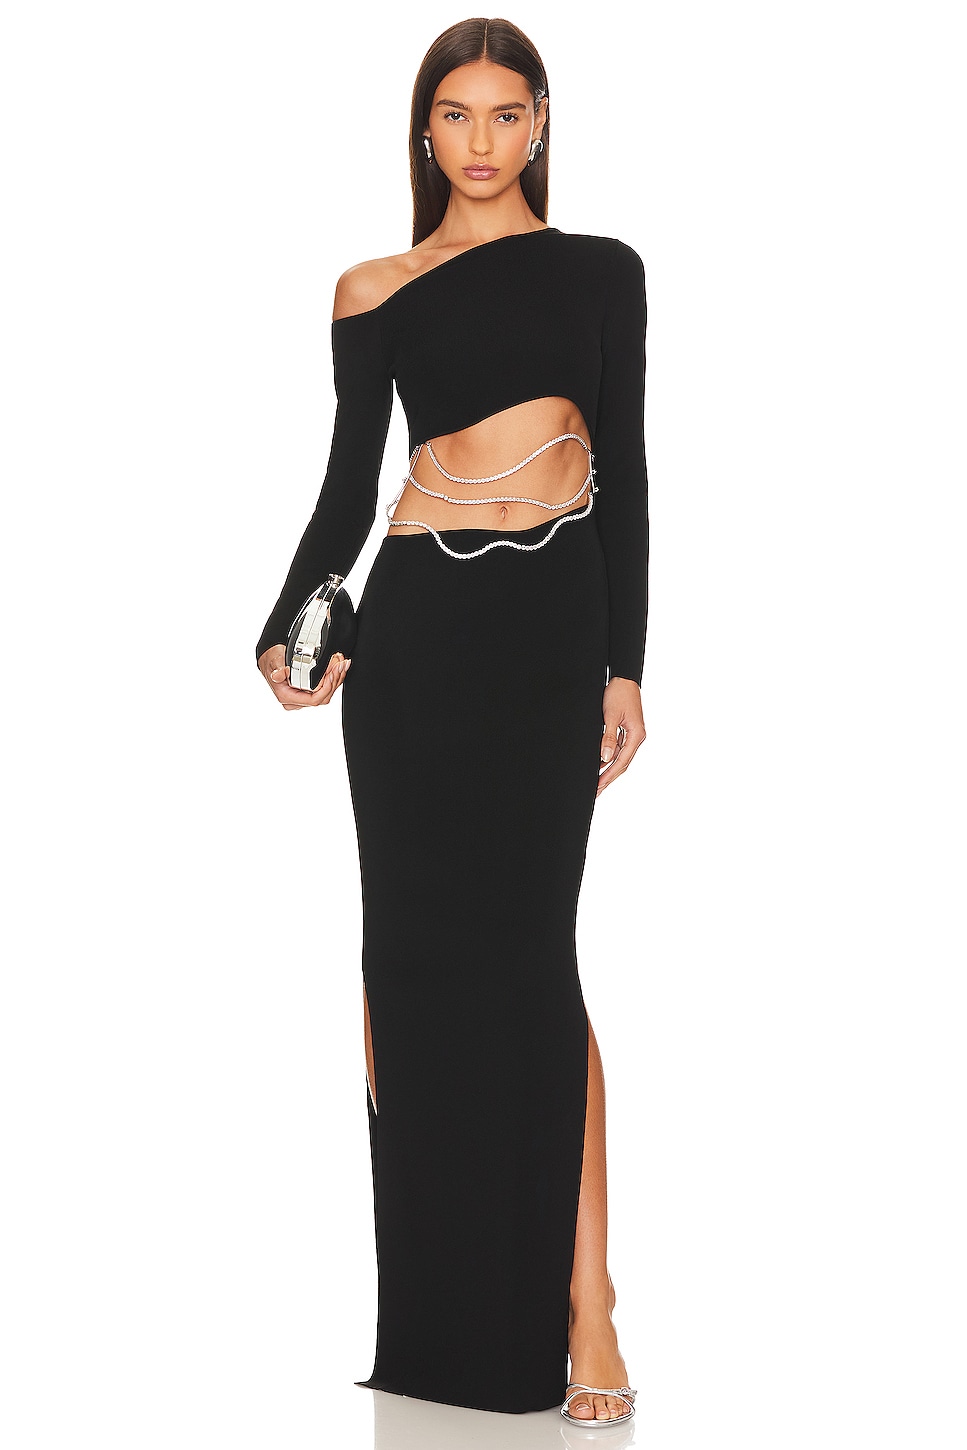 Aya Muse Lero Dress in Black | REVOLVE